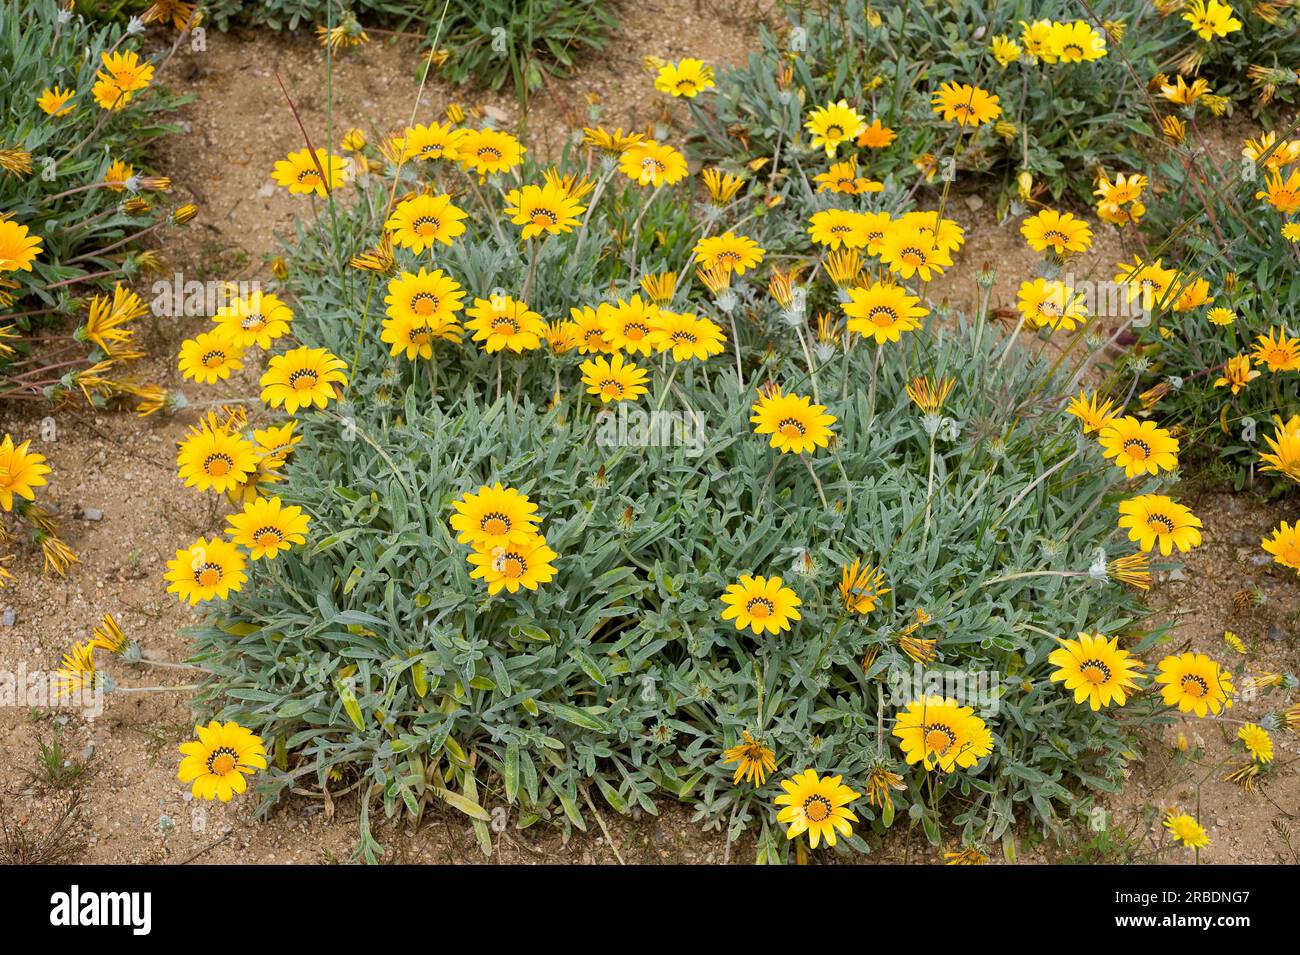 Treasure flower (Gazania linearis or G.azania longiscapa) is a perennial herb native to South Africa. Stock Photo